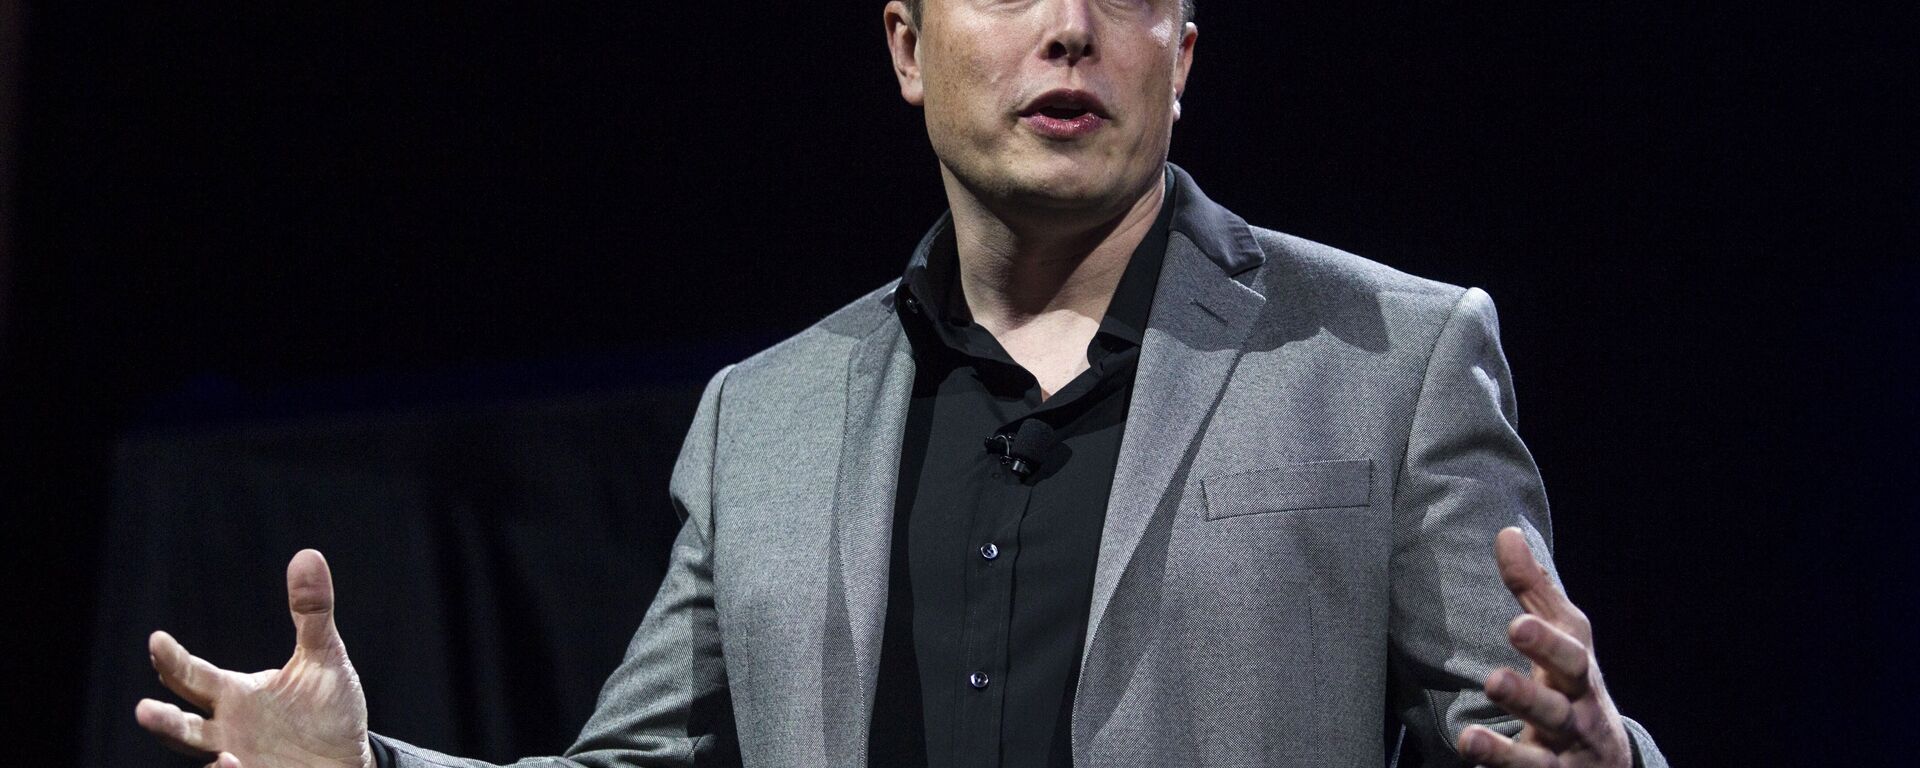 Elon Musk, CEO of Tesla Motors and SpaceX (File) - Sputnik International, 1920, 09.04.2021